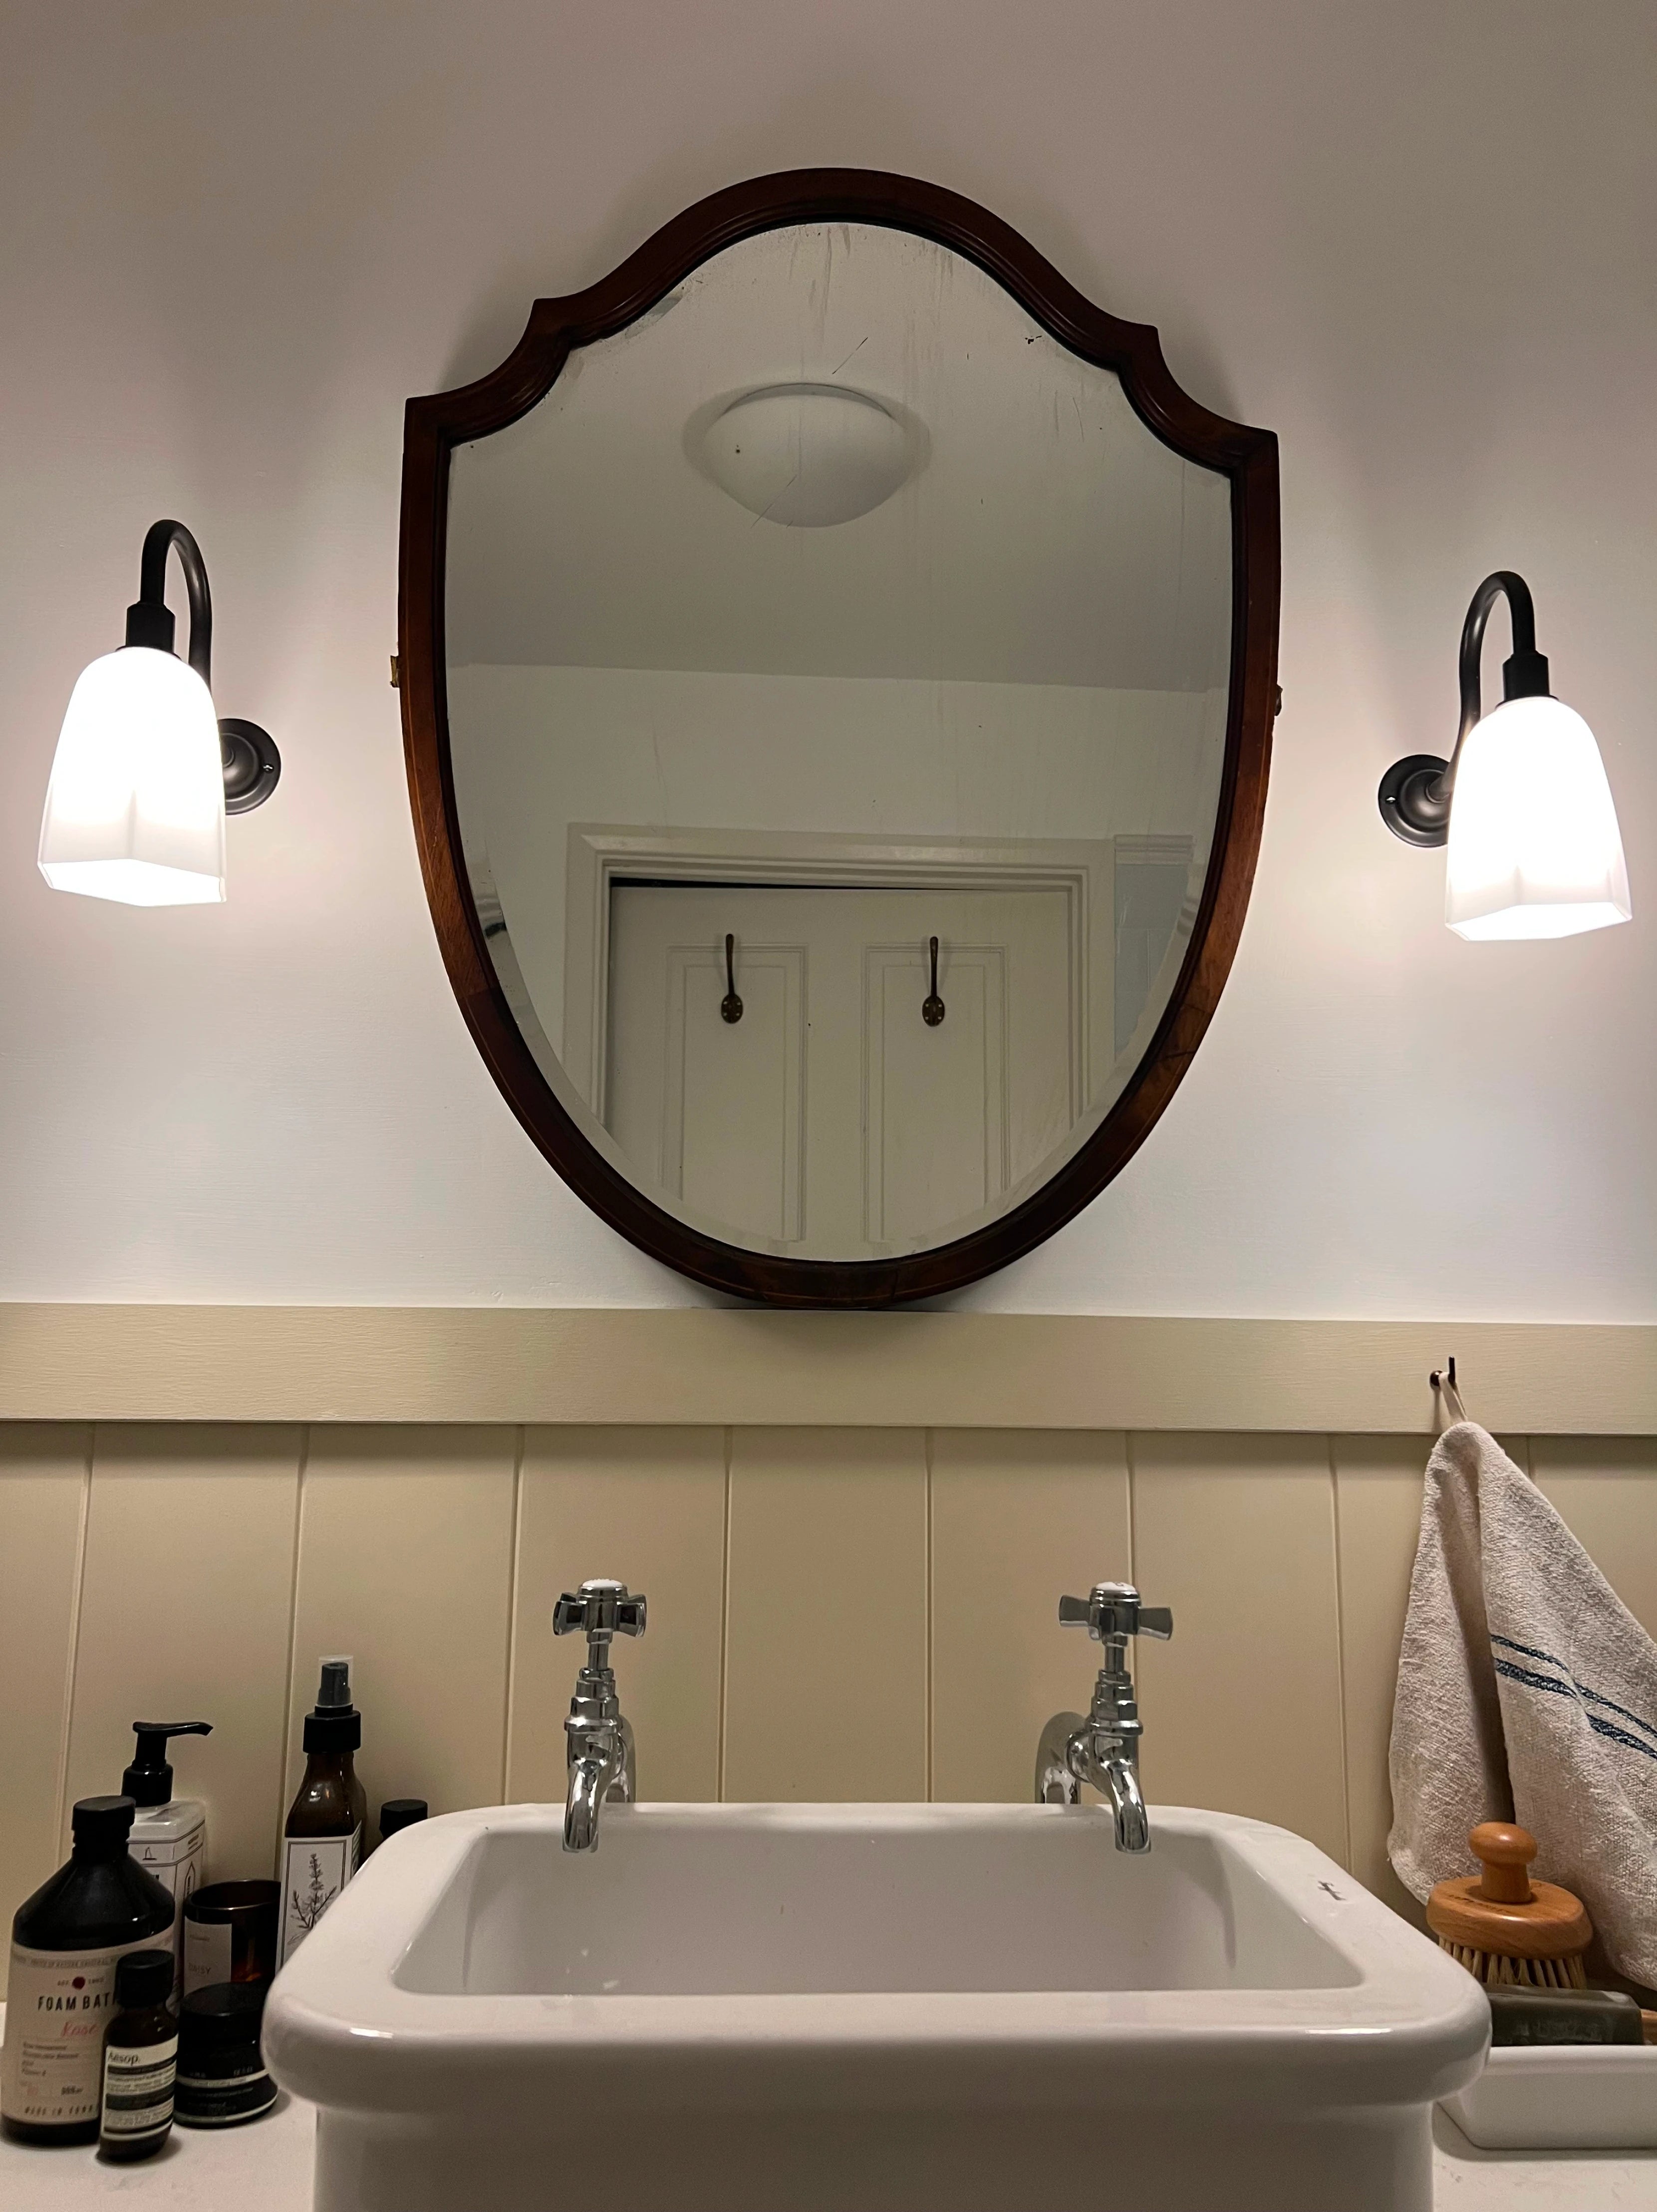 A mirror above a sink.